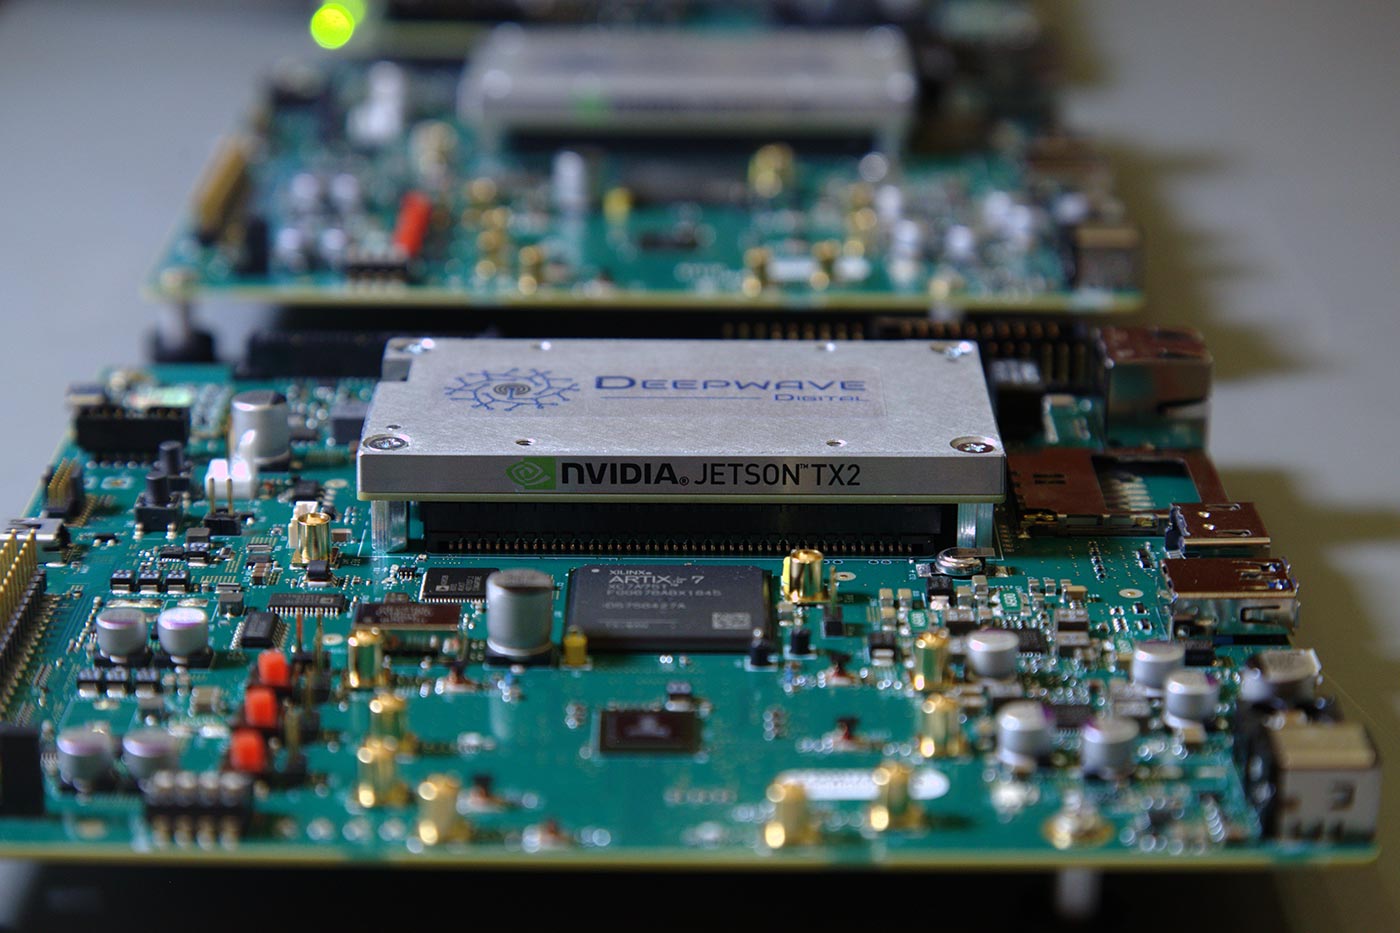 Deepwave Digital AI circuit board